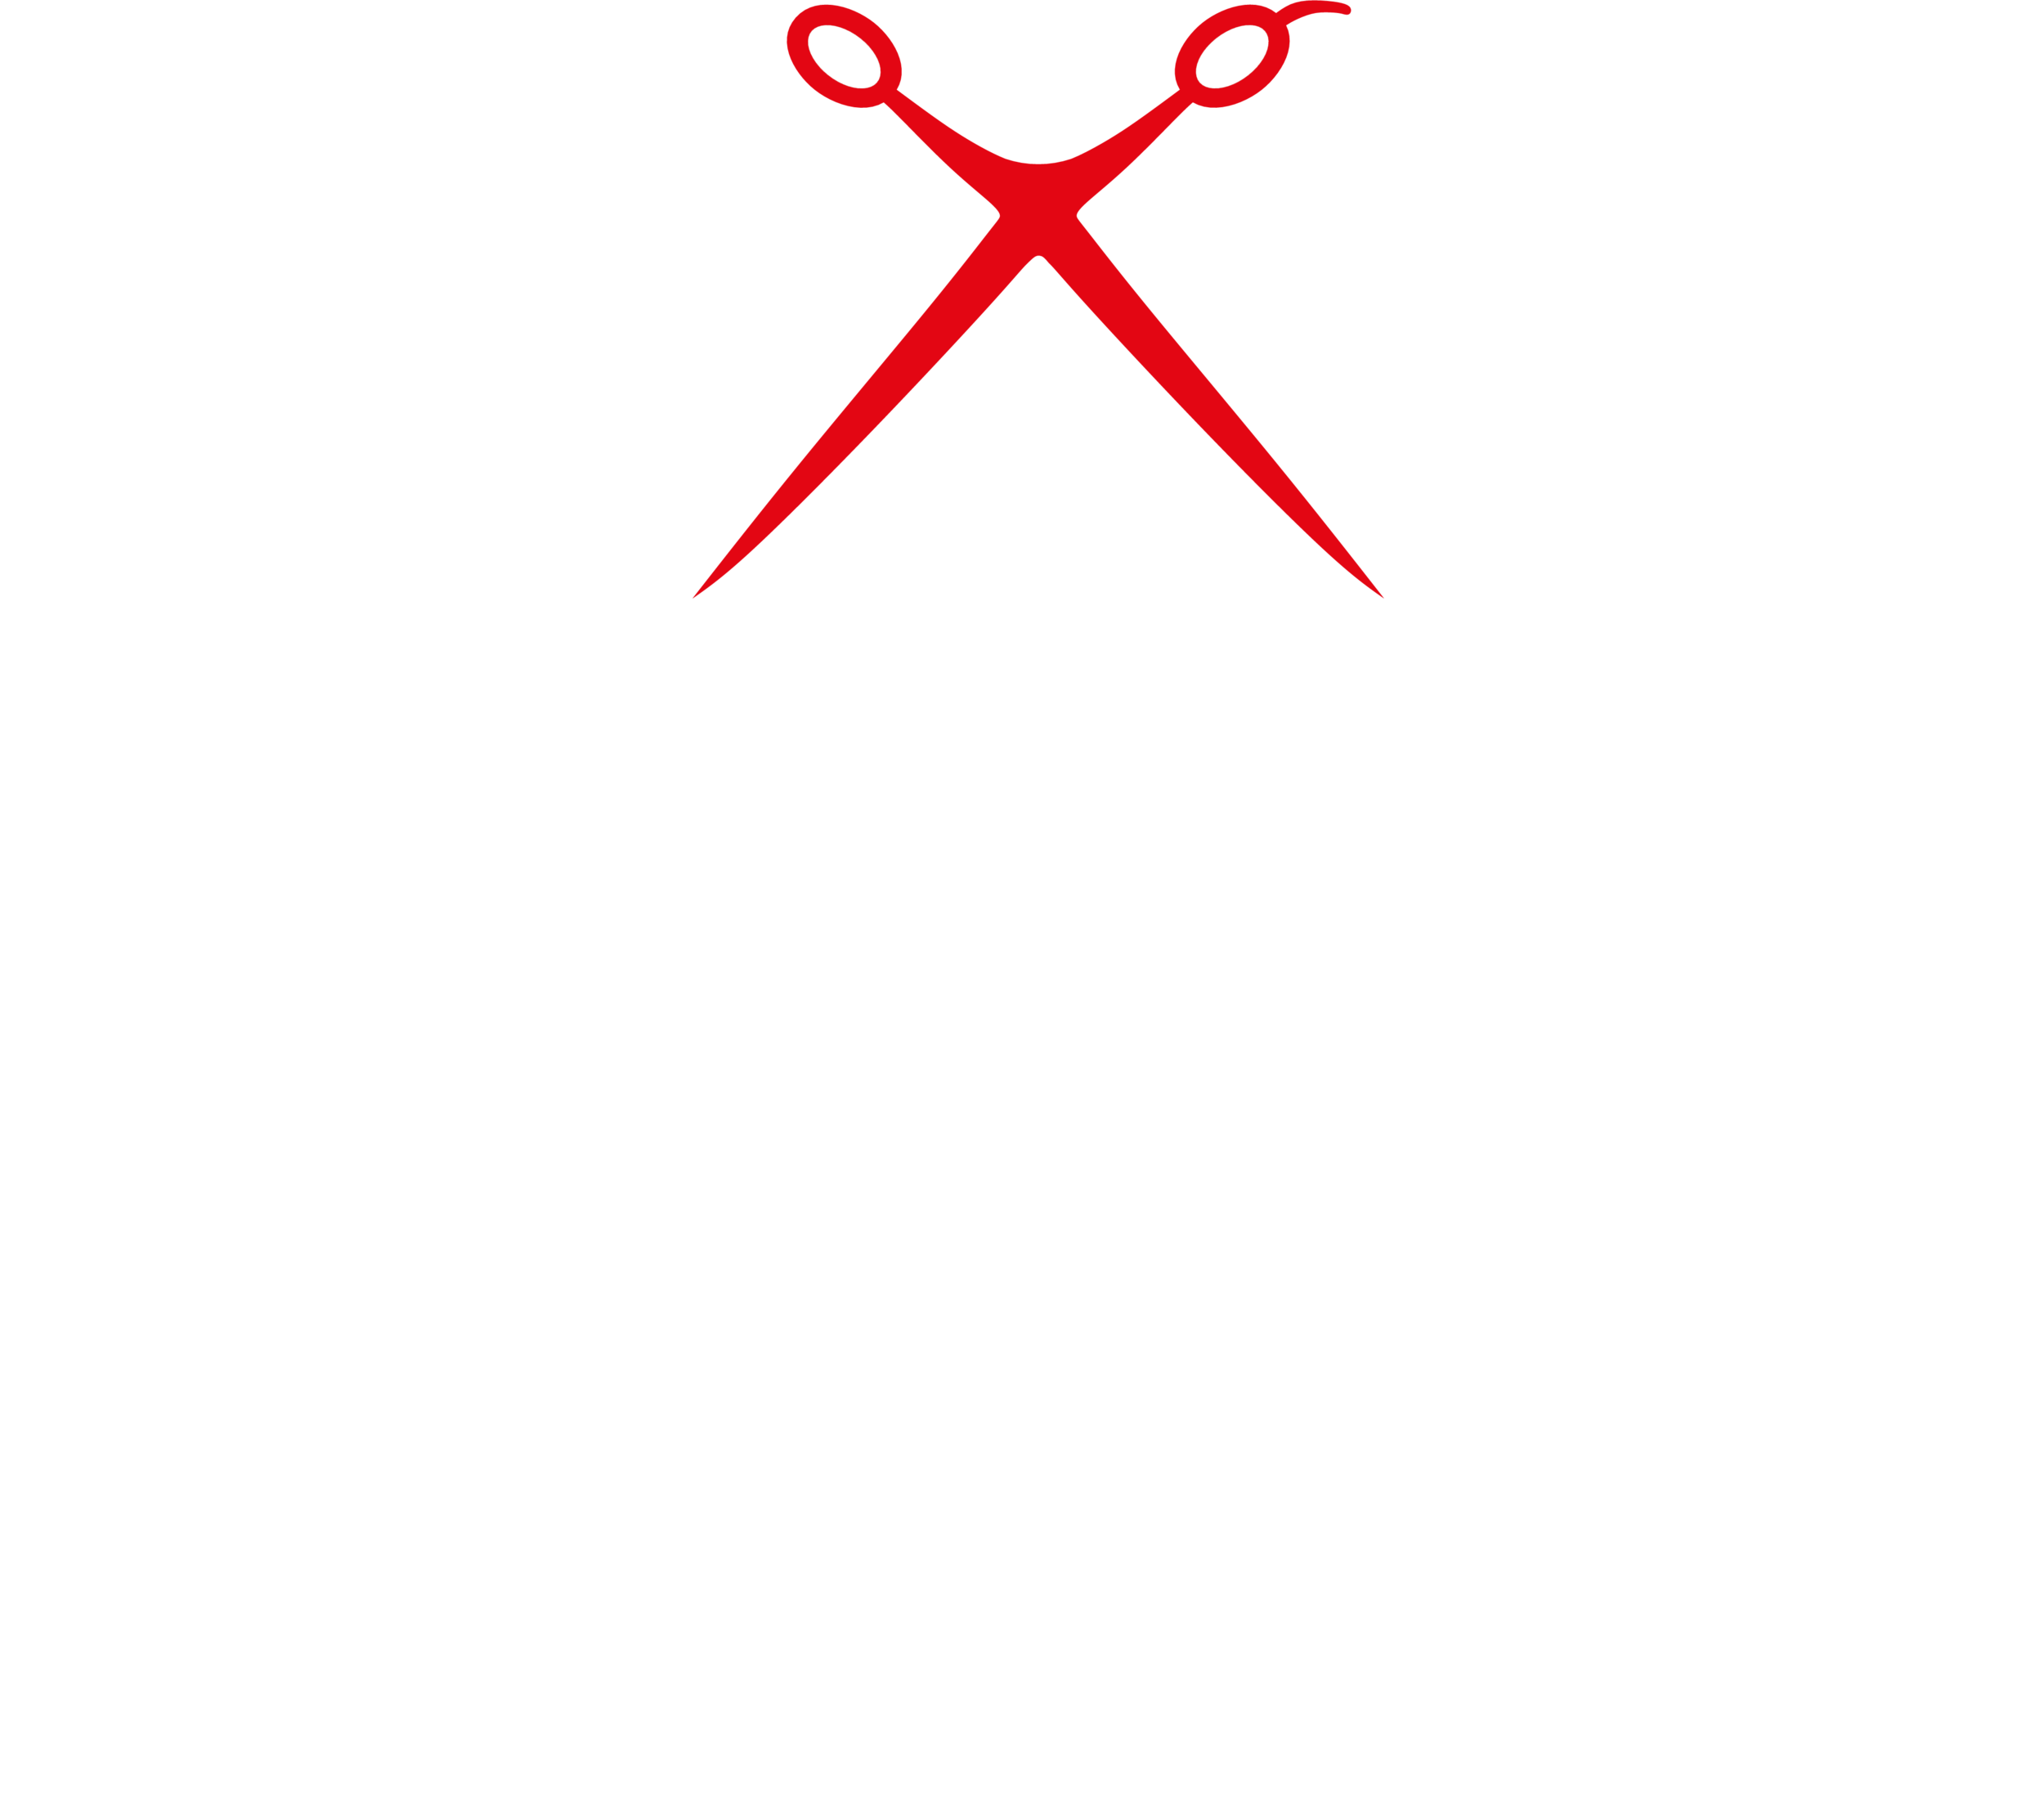 the attic barbershop